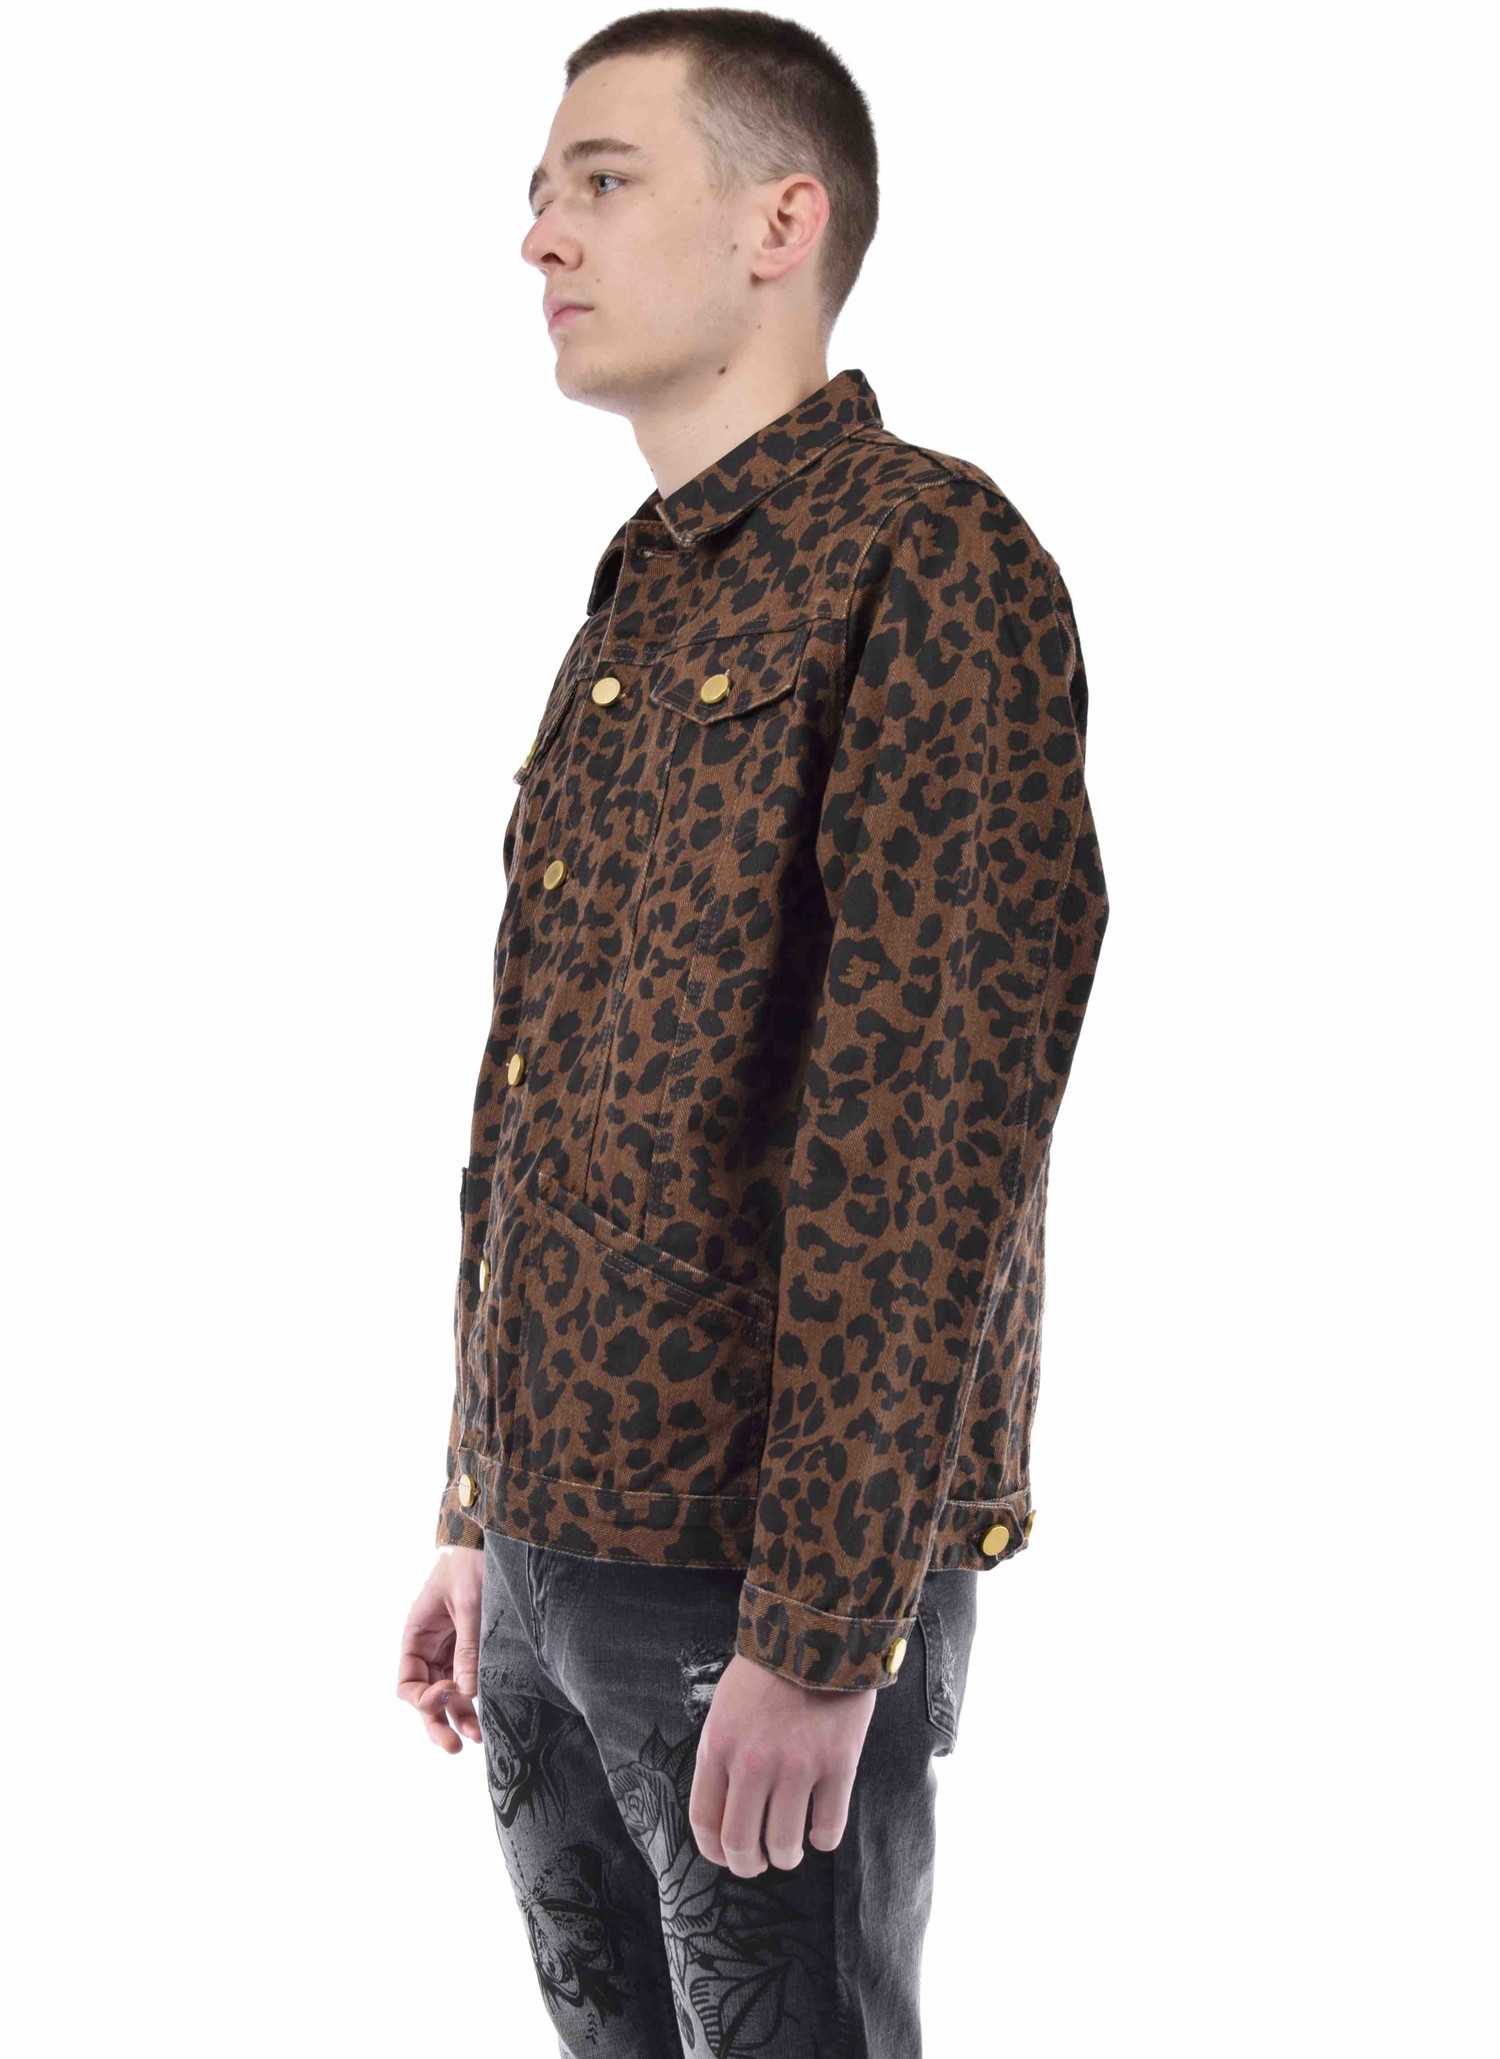 kenzie Leopard Jean Jackets for Women | Mercari